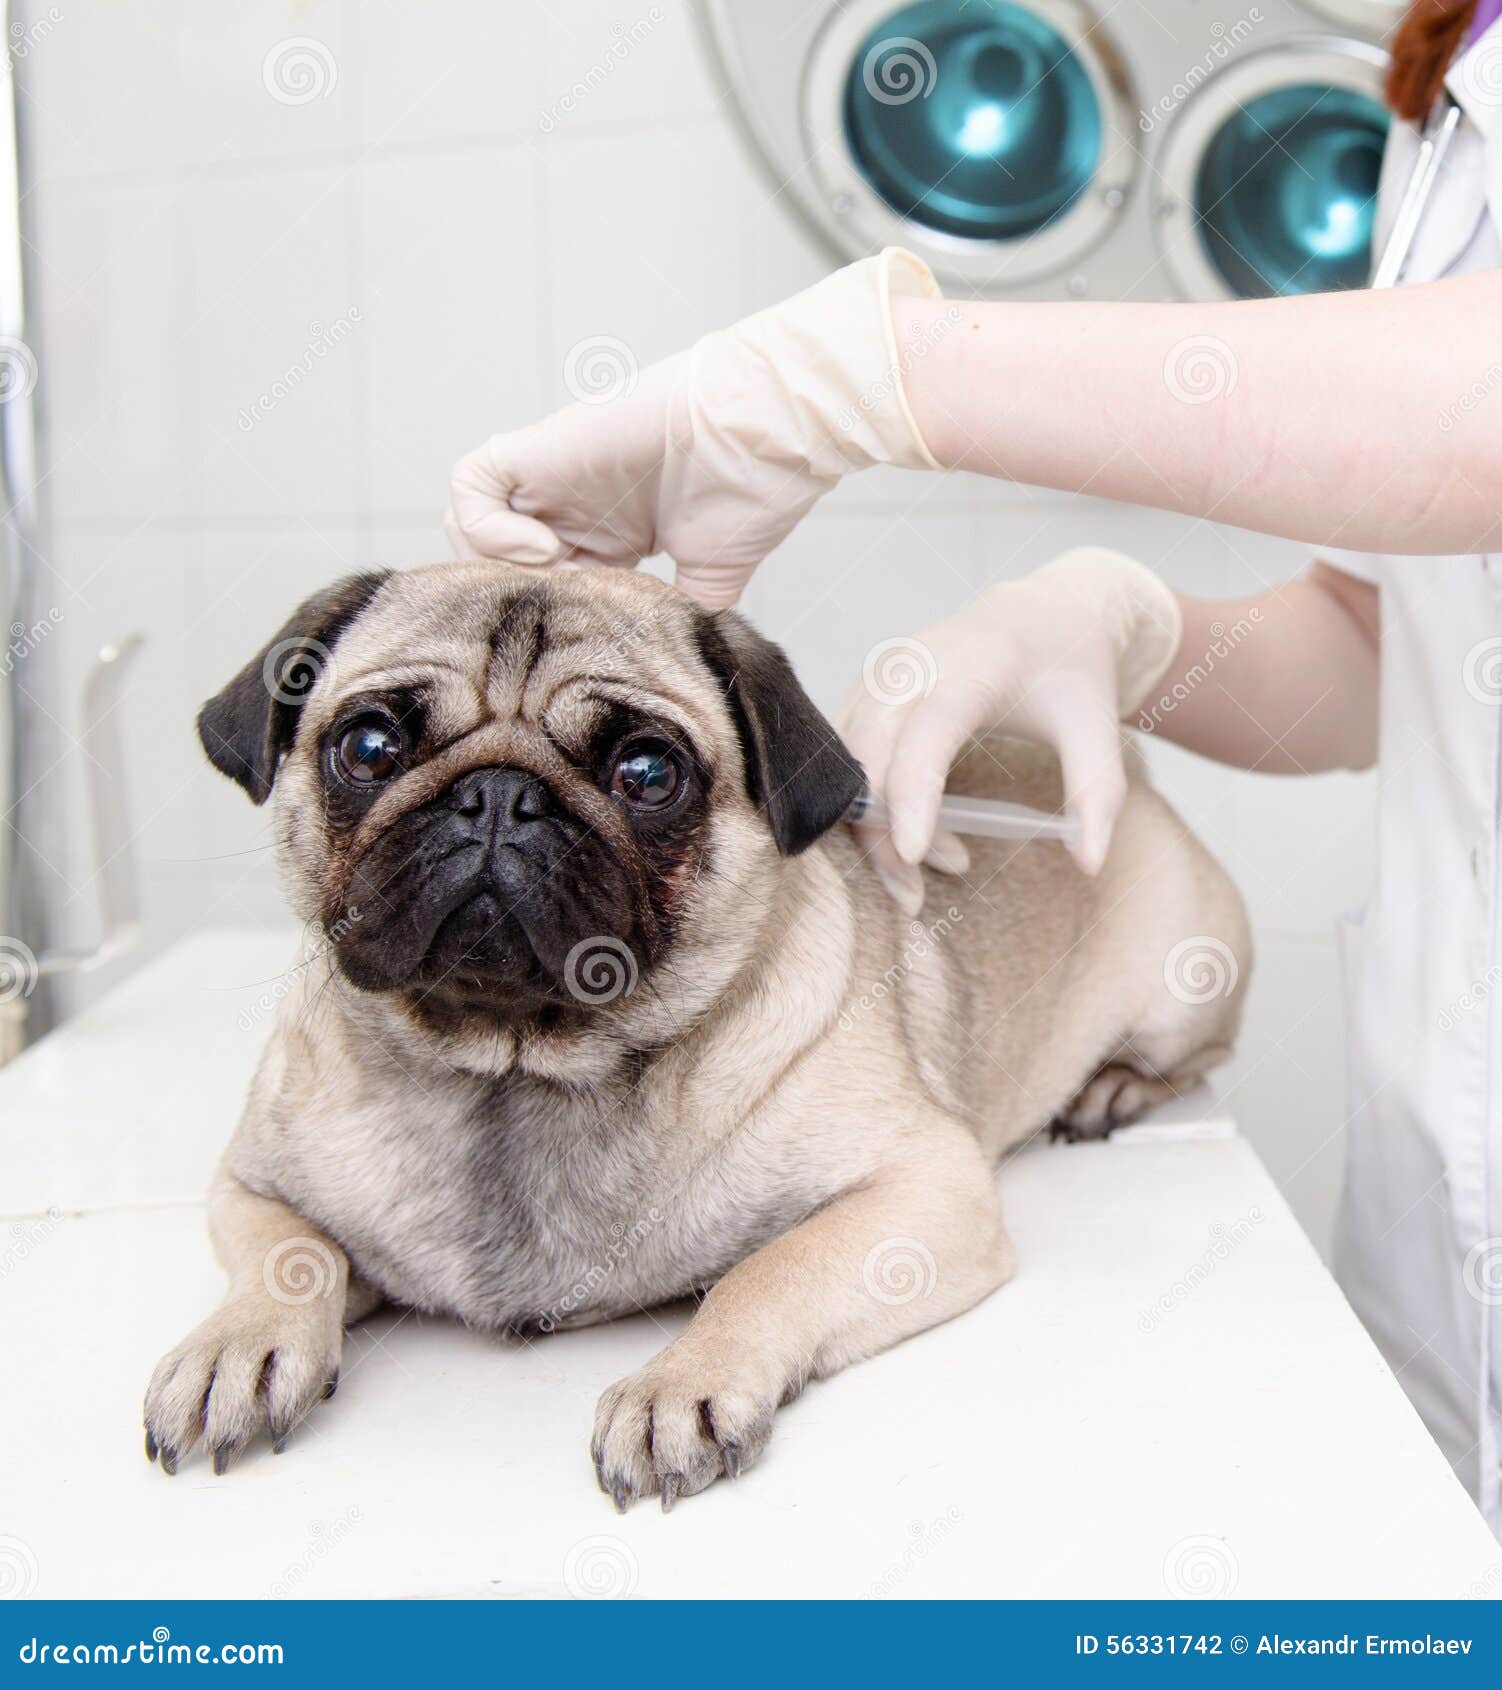 closeup dog receive the vaccine in a veterinary clinic